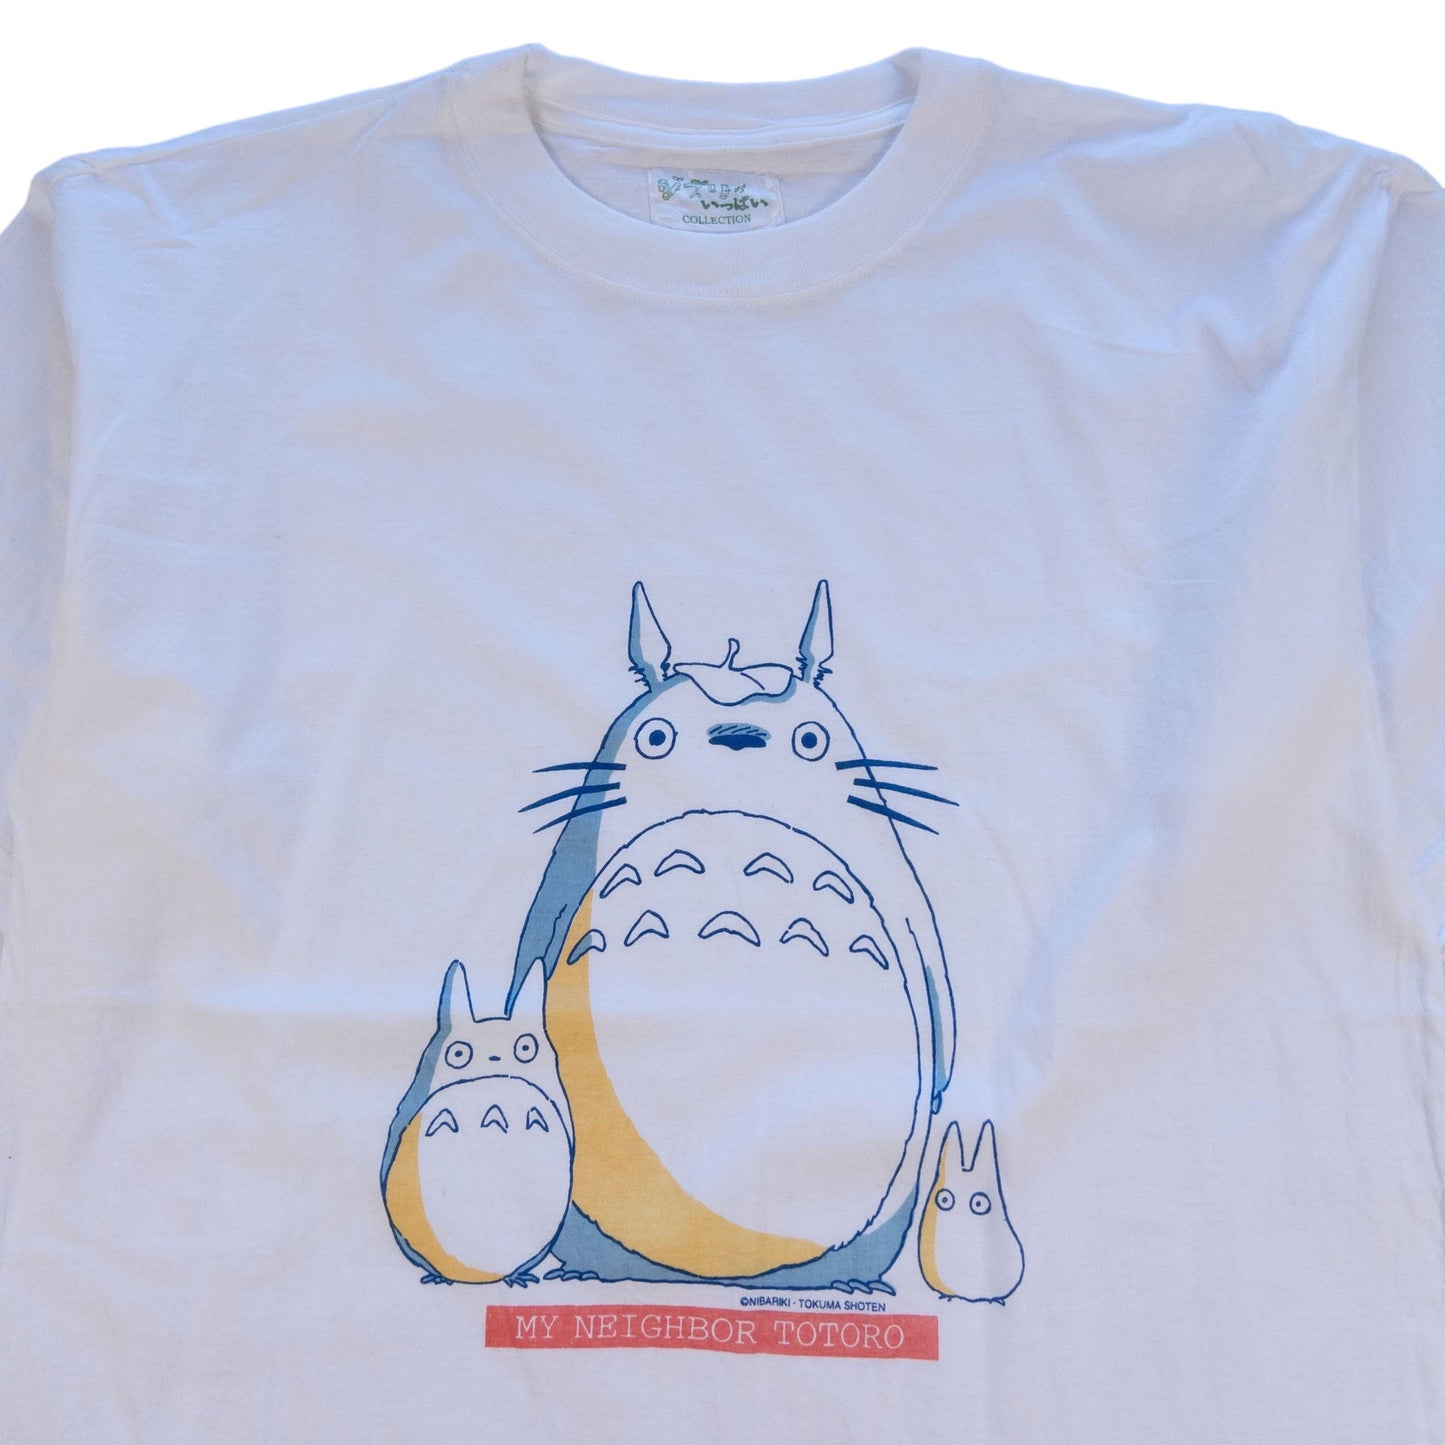 Vintage My Neighbour Totoro Studio Ghibli T Shirt Size S